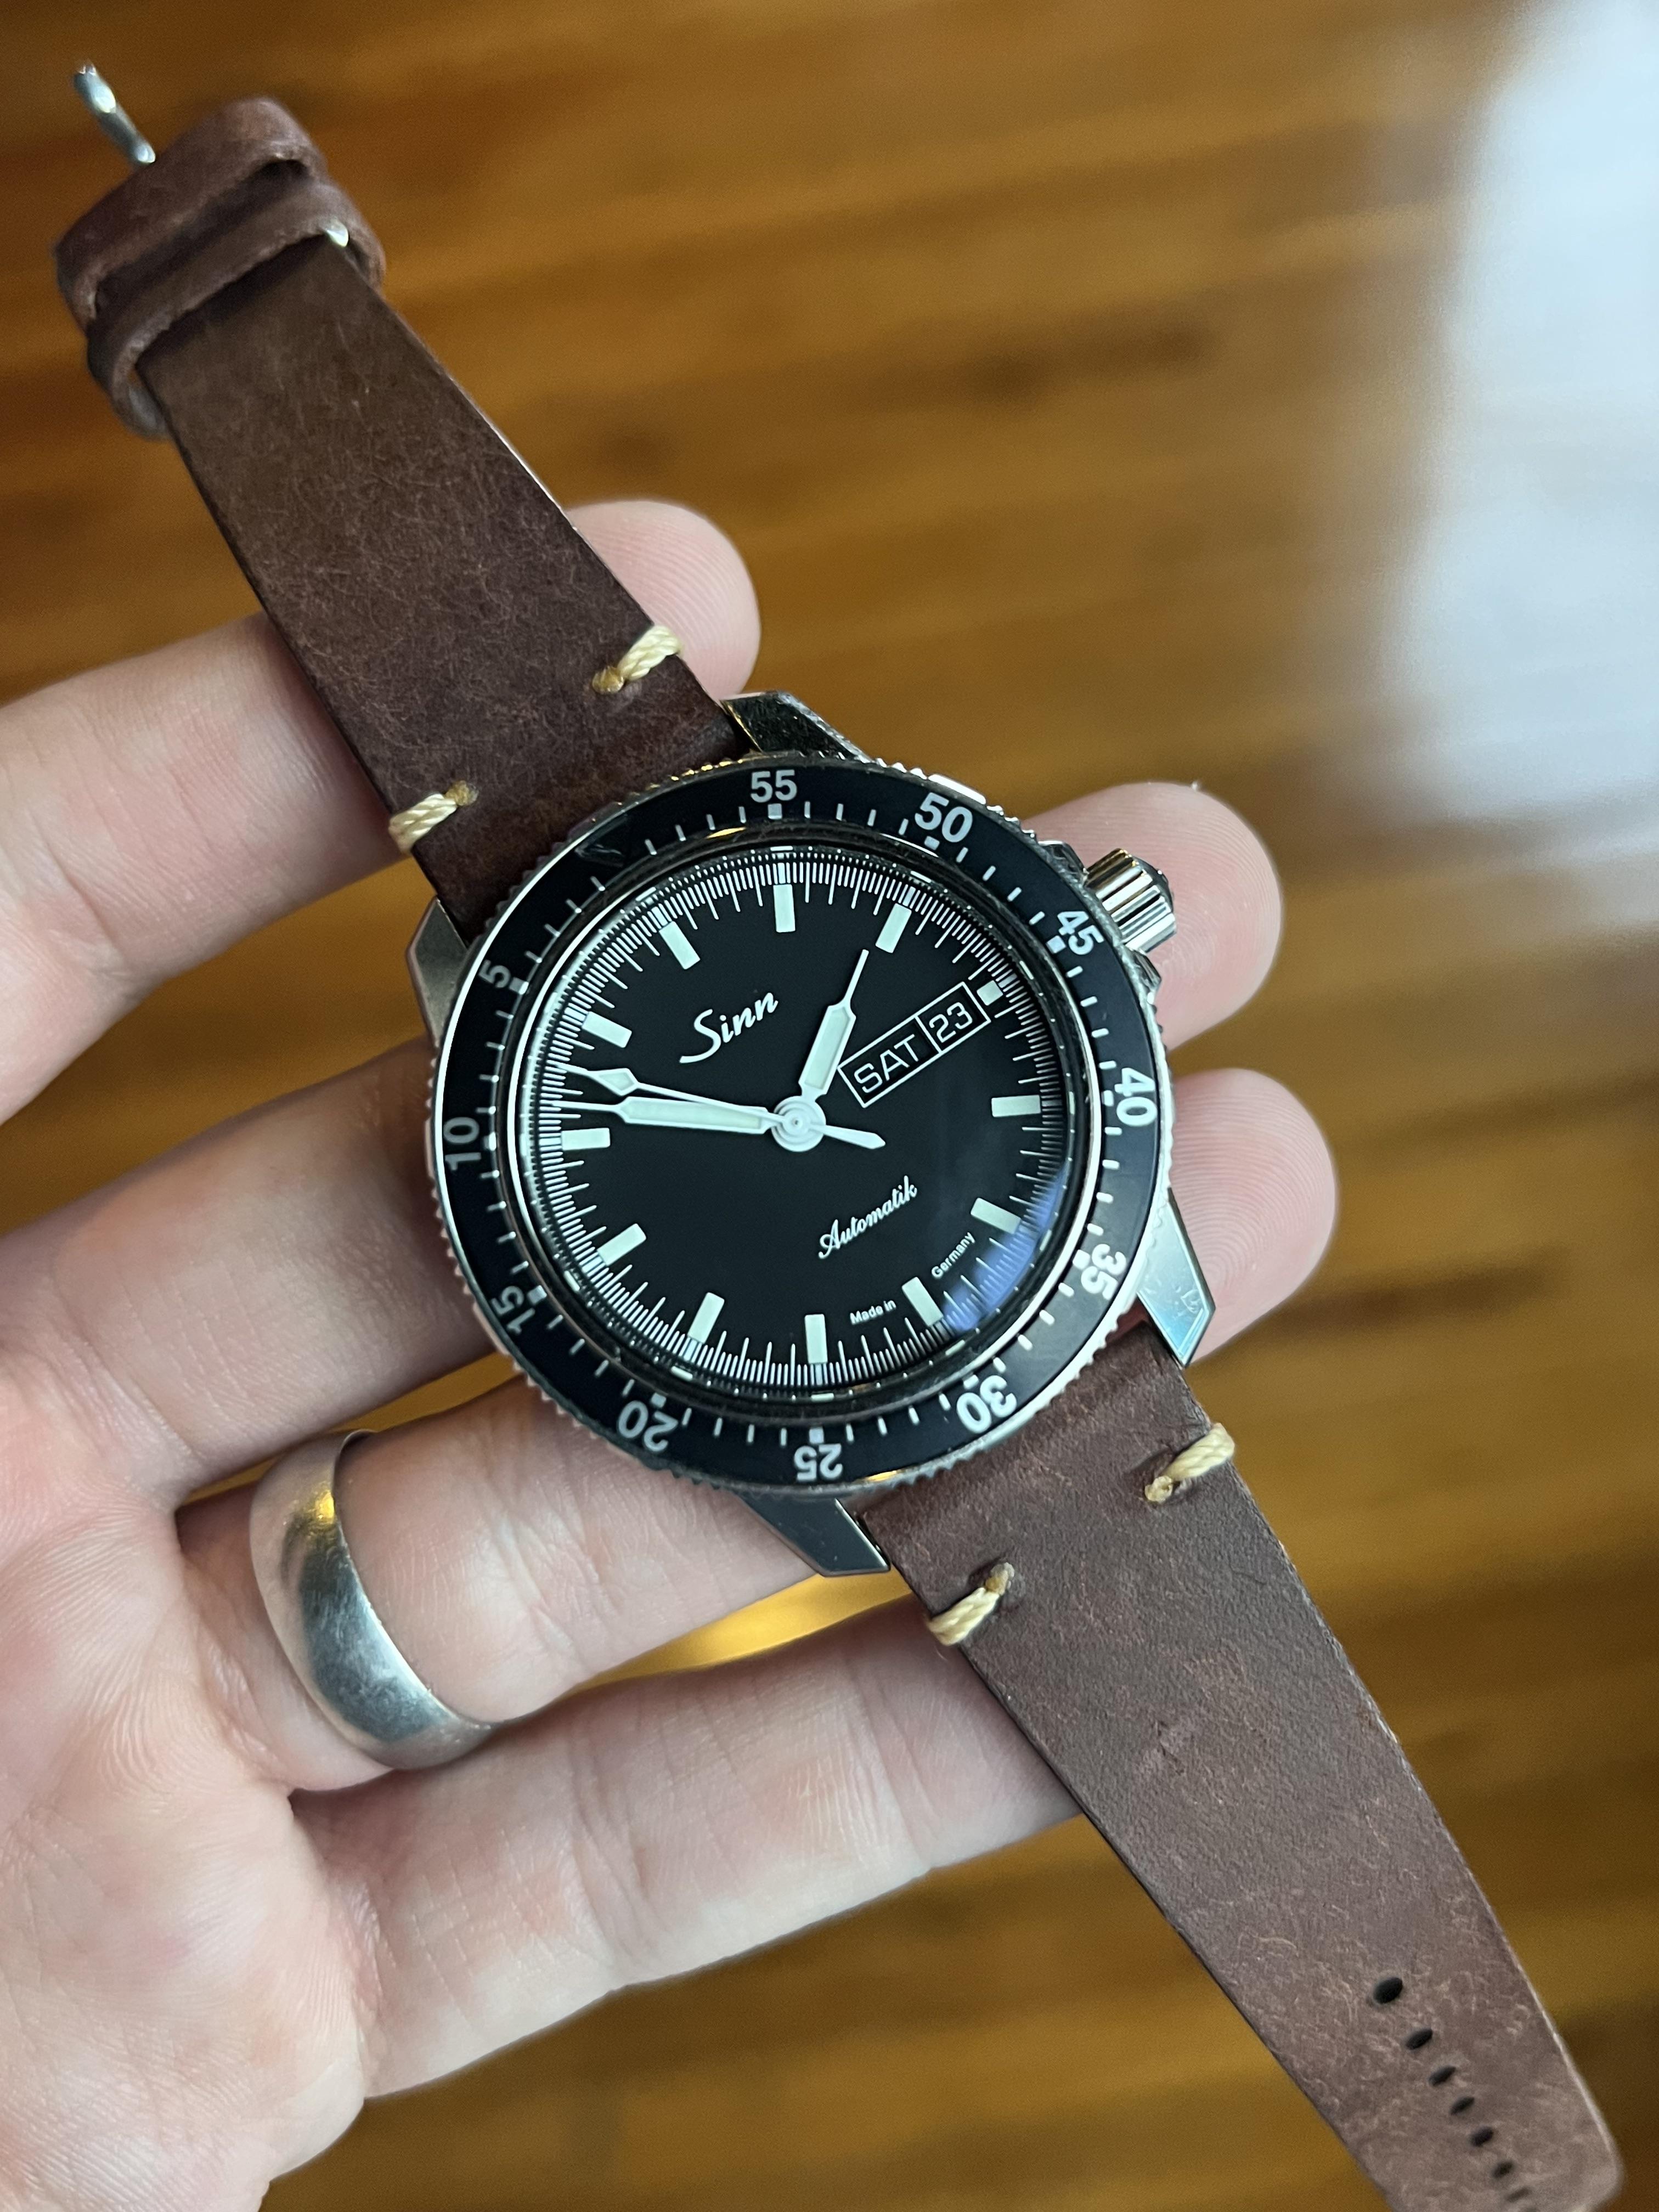 WTReplace Pilot watch - minimalist, affordable | WatchUSeek Watch Forums